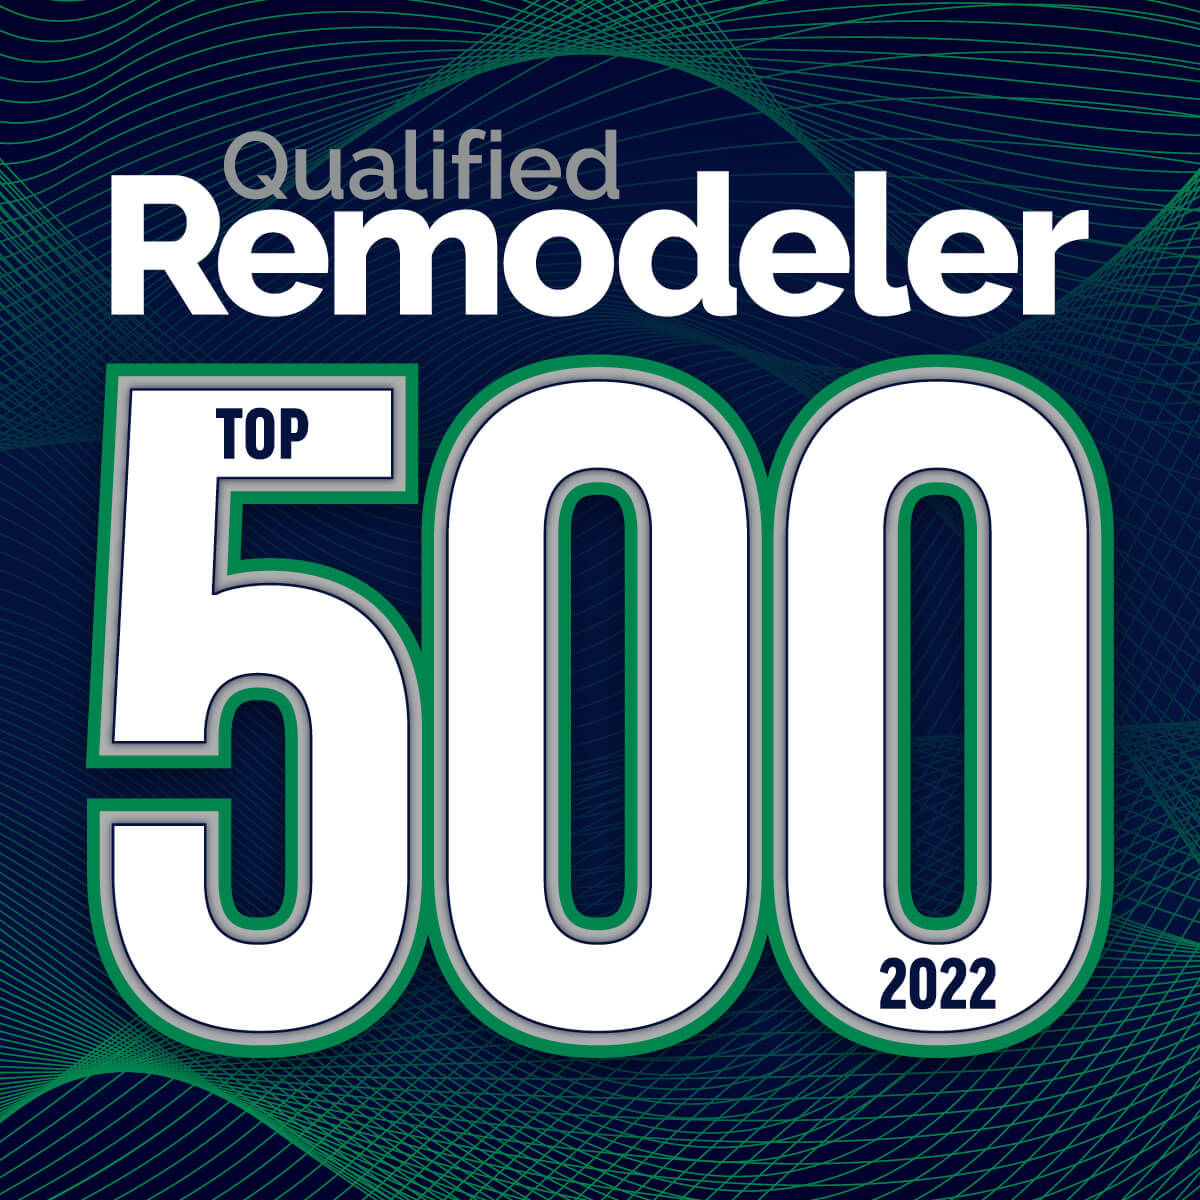 Bluestem Named In Qualified Remodeler’s 2022 TOP 500 List!